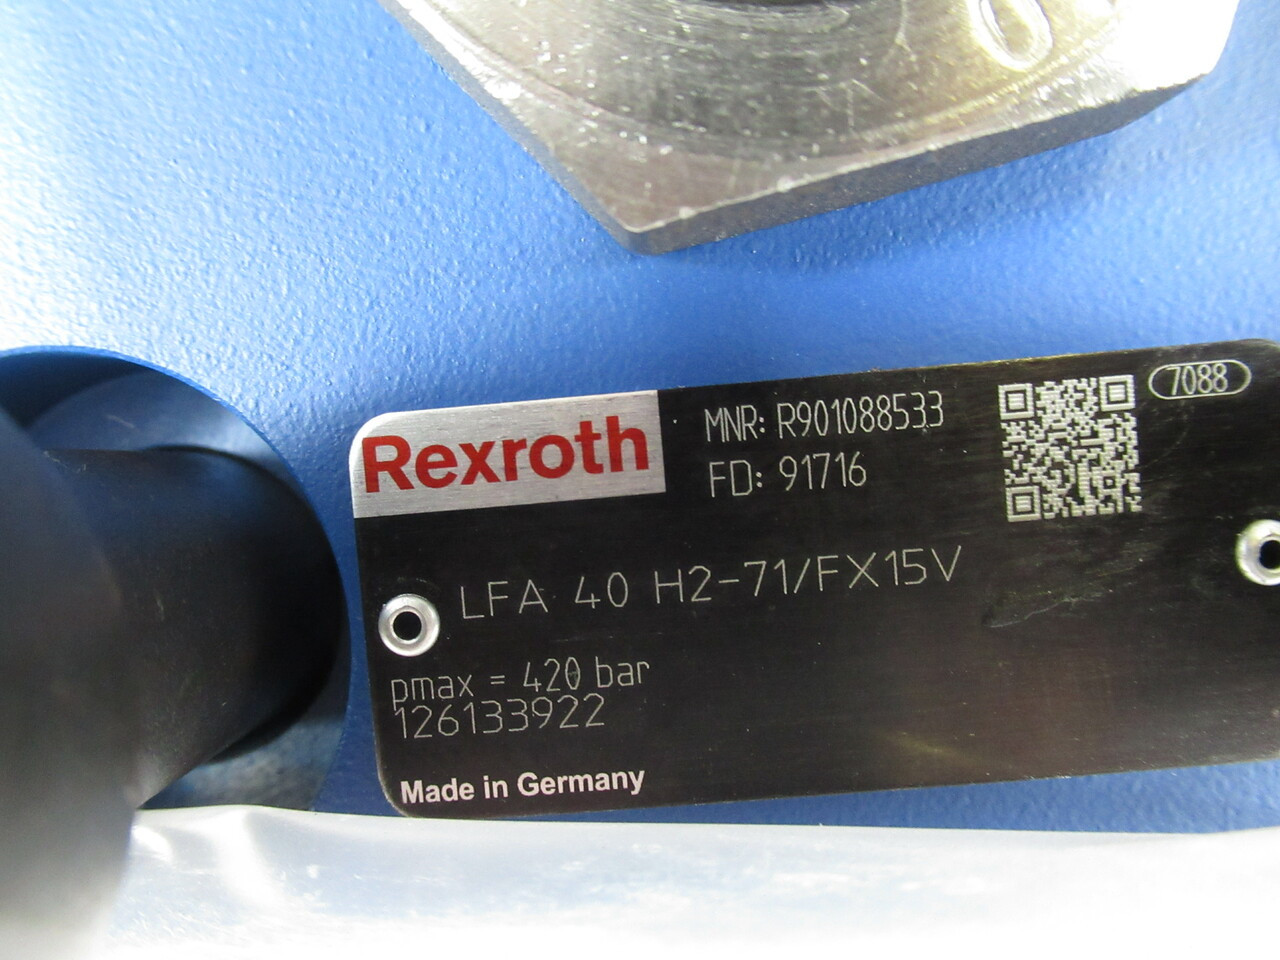 Rexroth R901088533 Pilot Control Cover Valve 420 bar Size 40 NOP